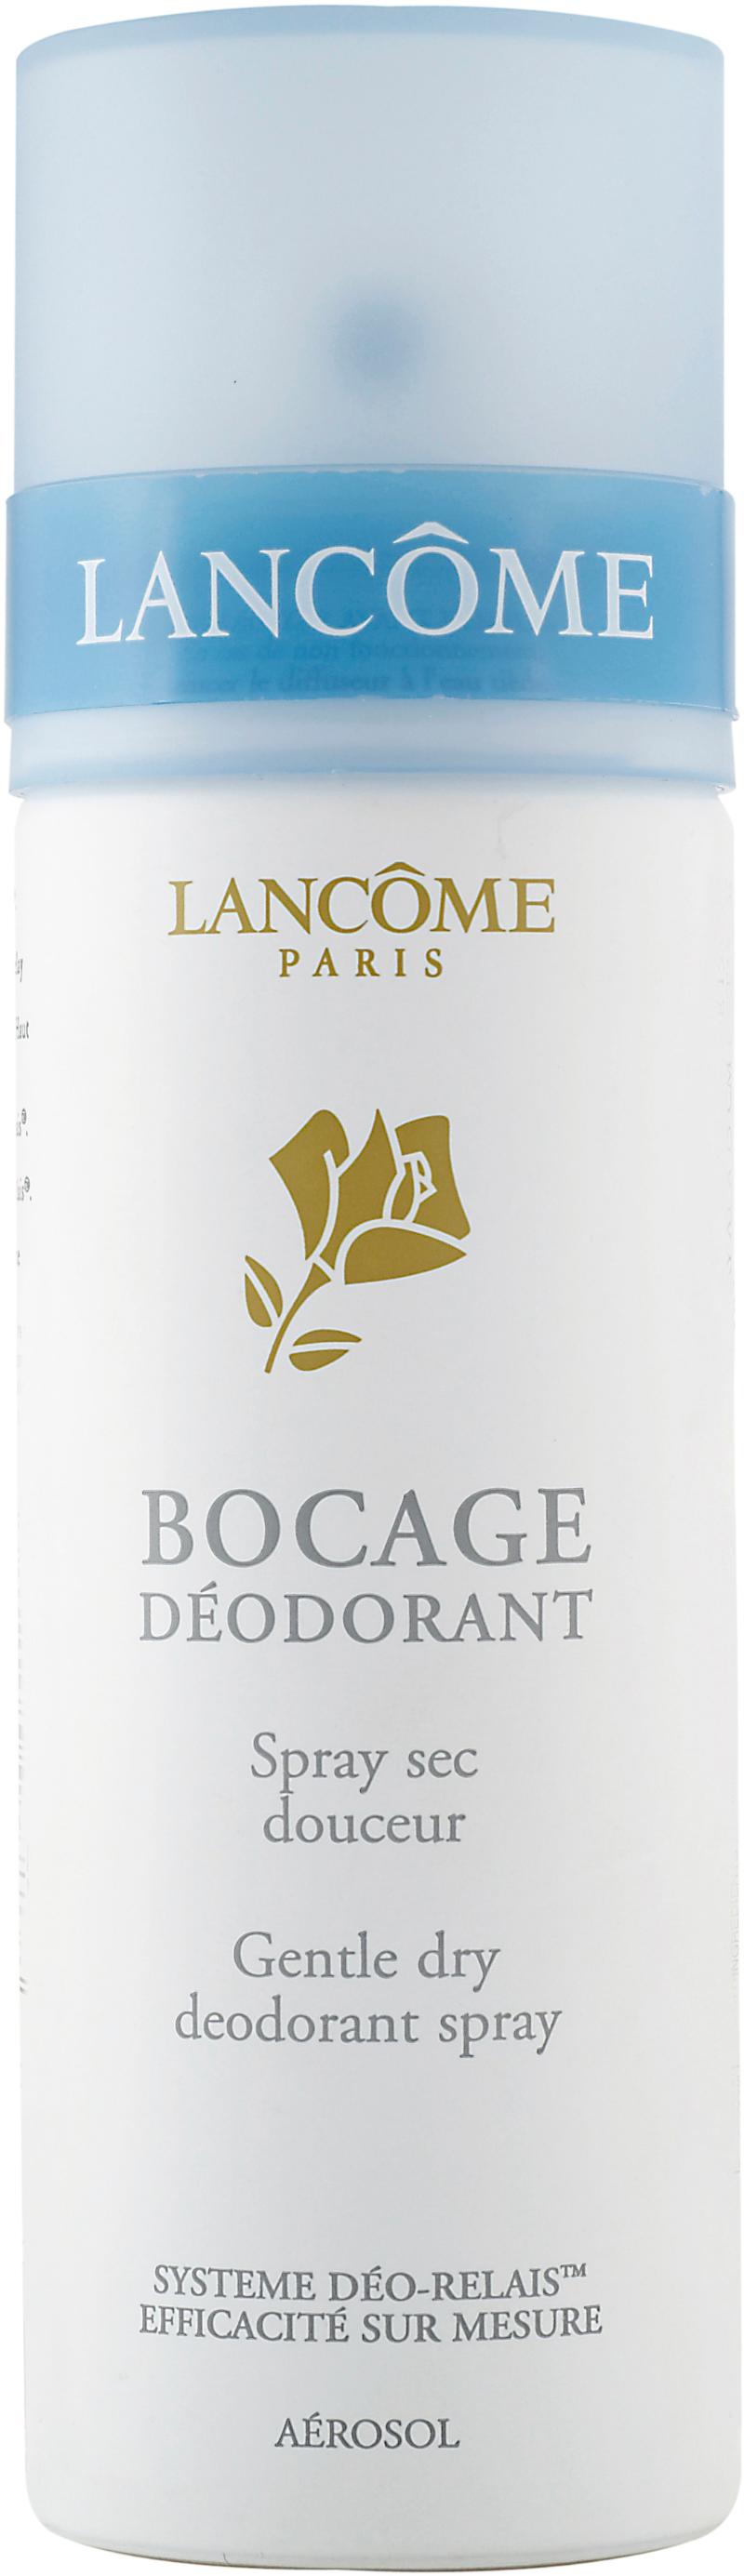 Lancôme - Bocage Deodorant Spray ml